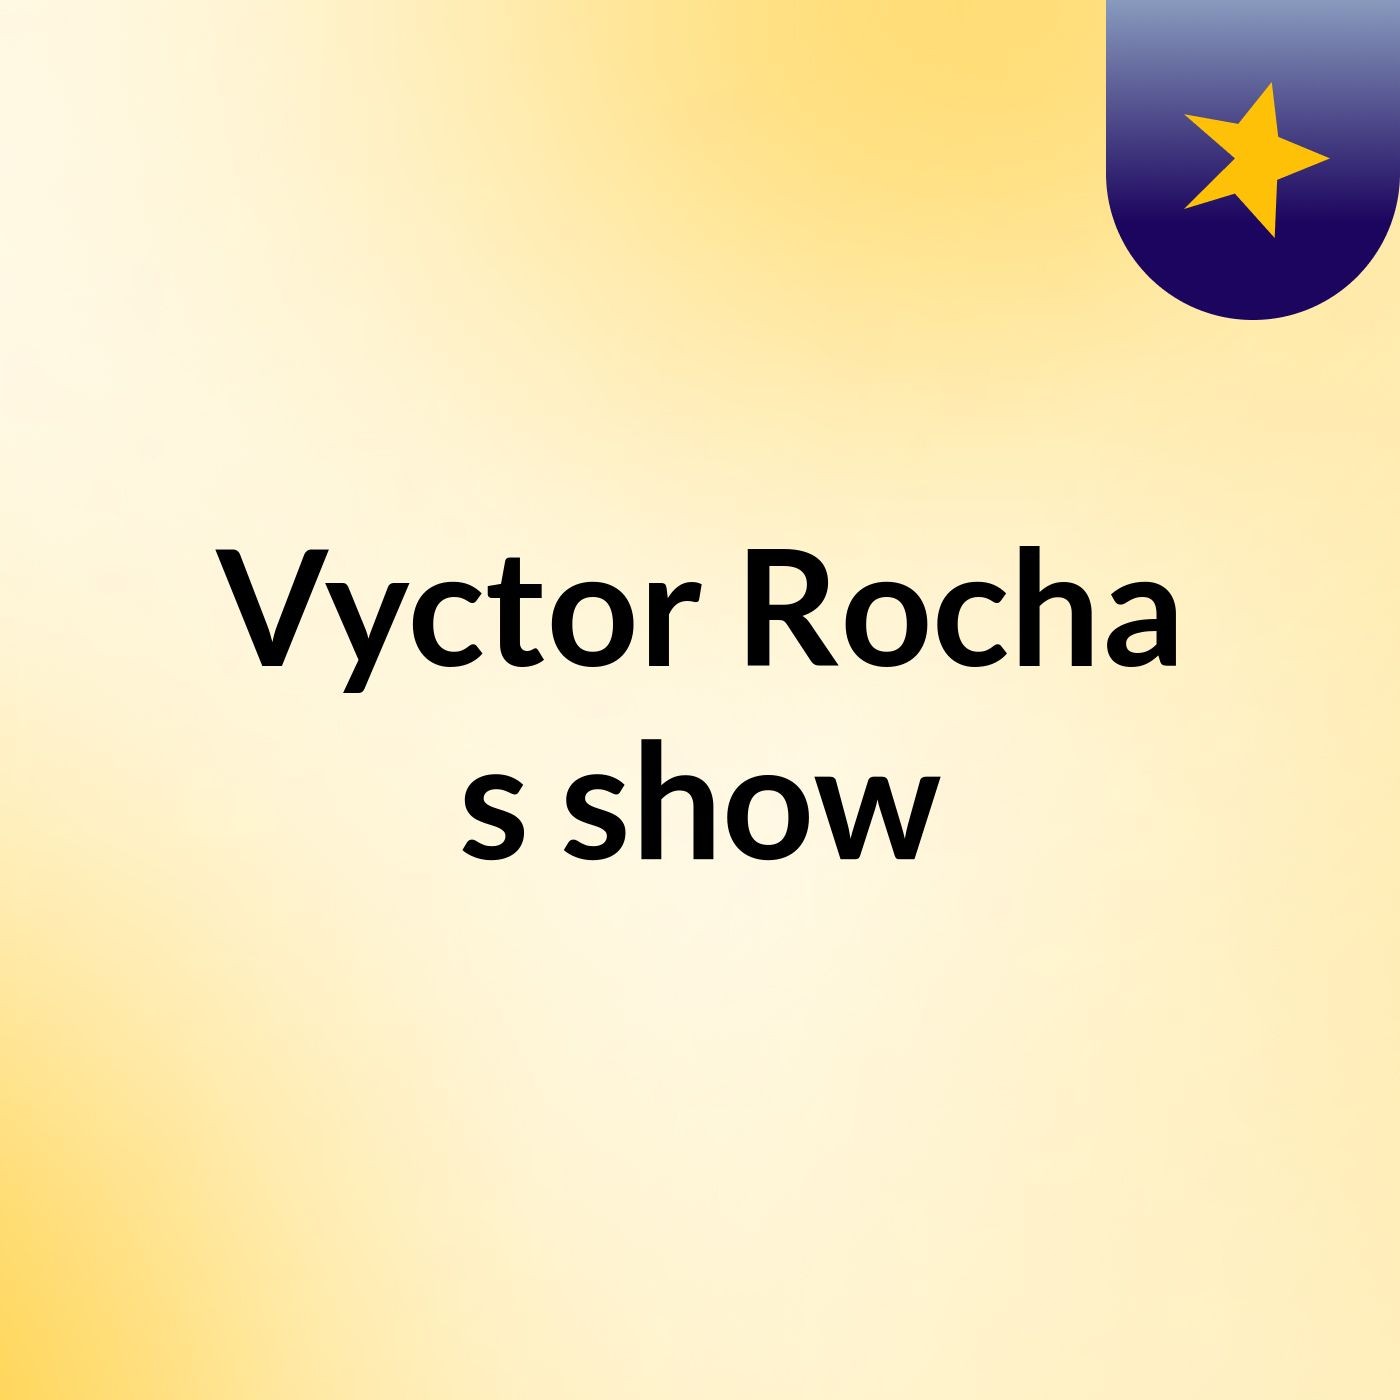 Vyctor Rocha's show